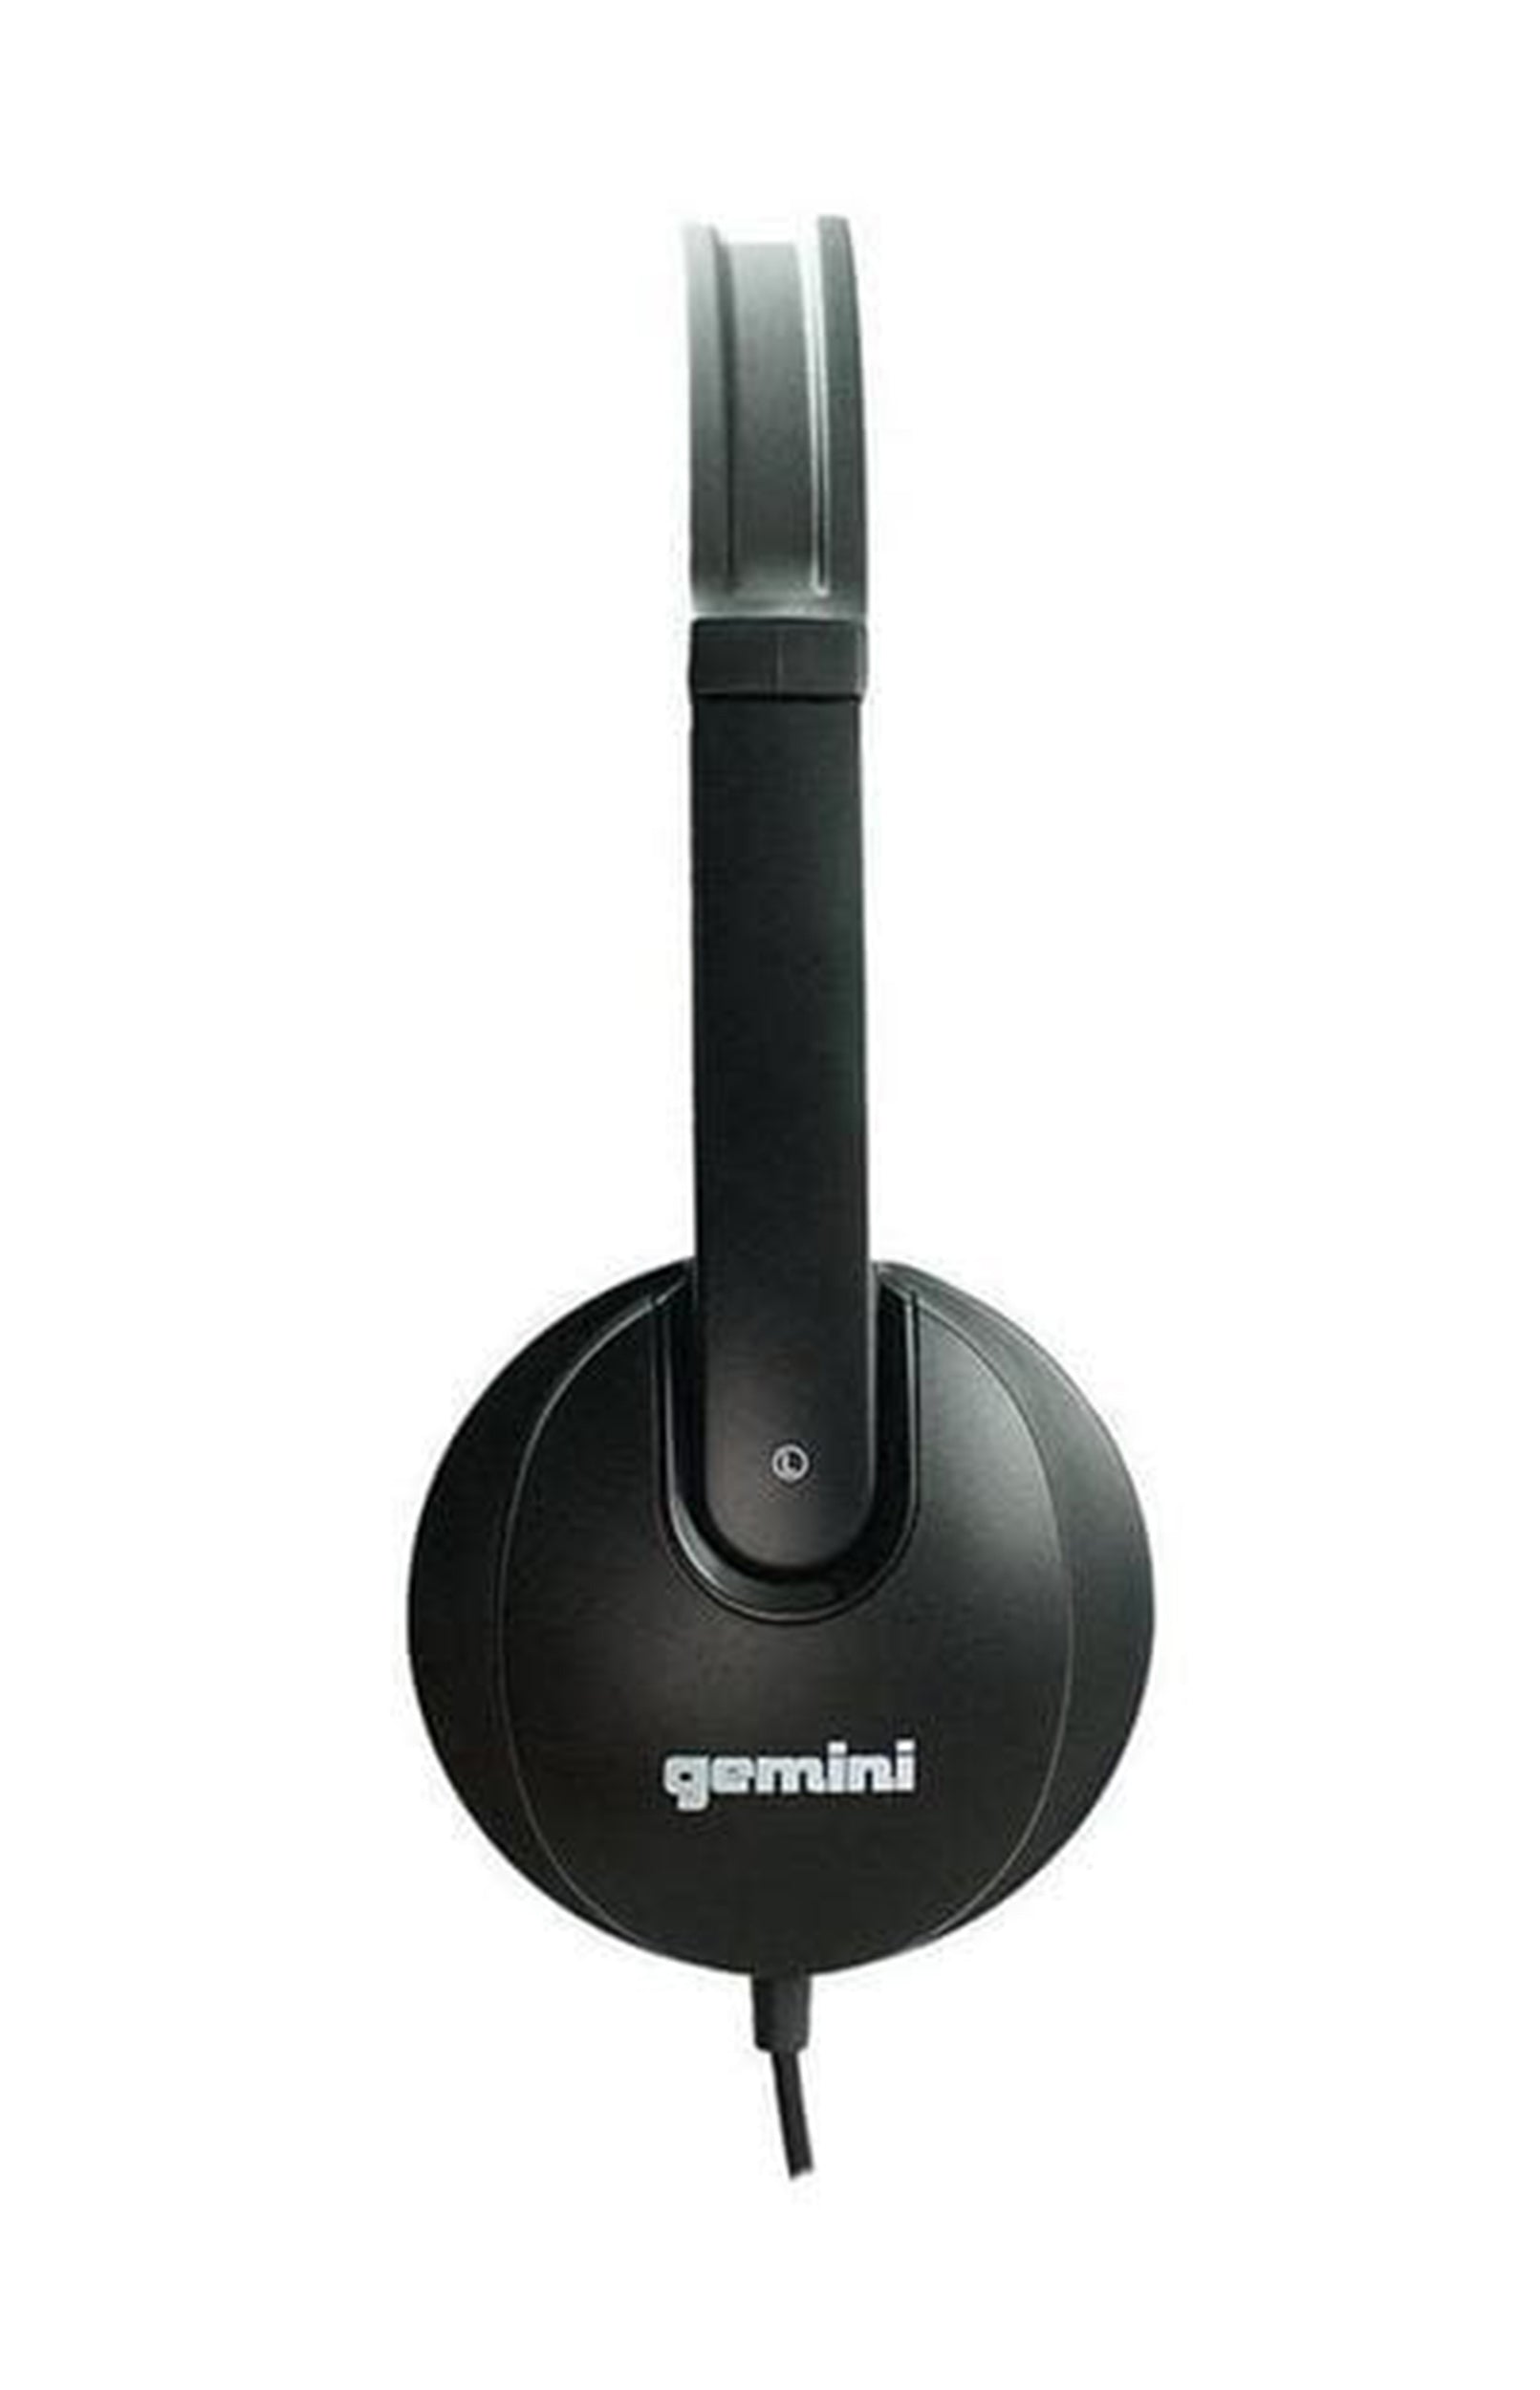 Gemini Sound DJX-200 (BLK) Professional DJ Headphones - Black - Hollywood DJ